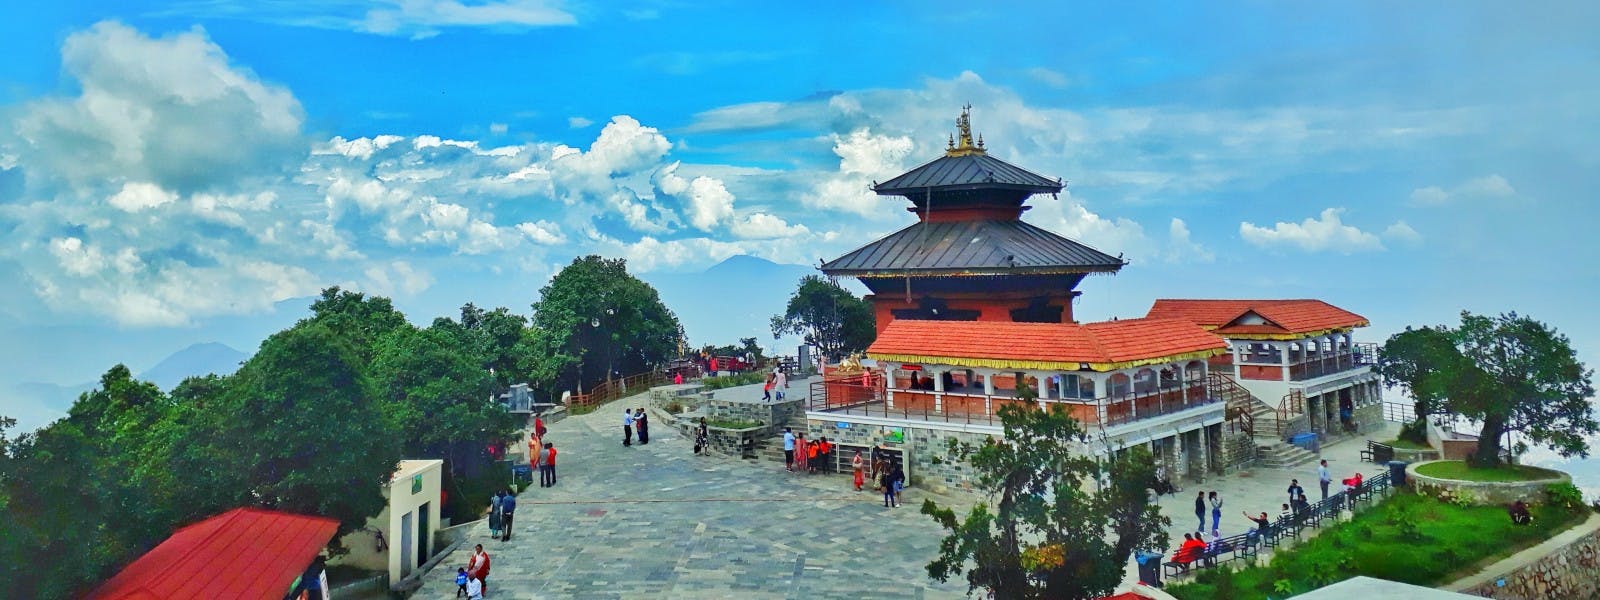 Kathmandu tourist destinations